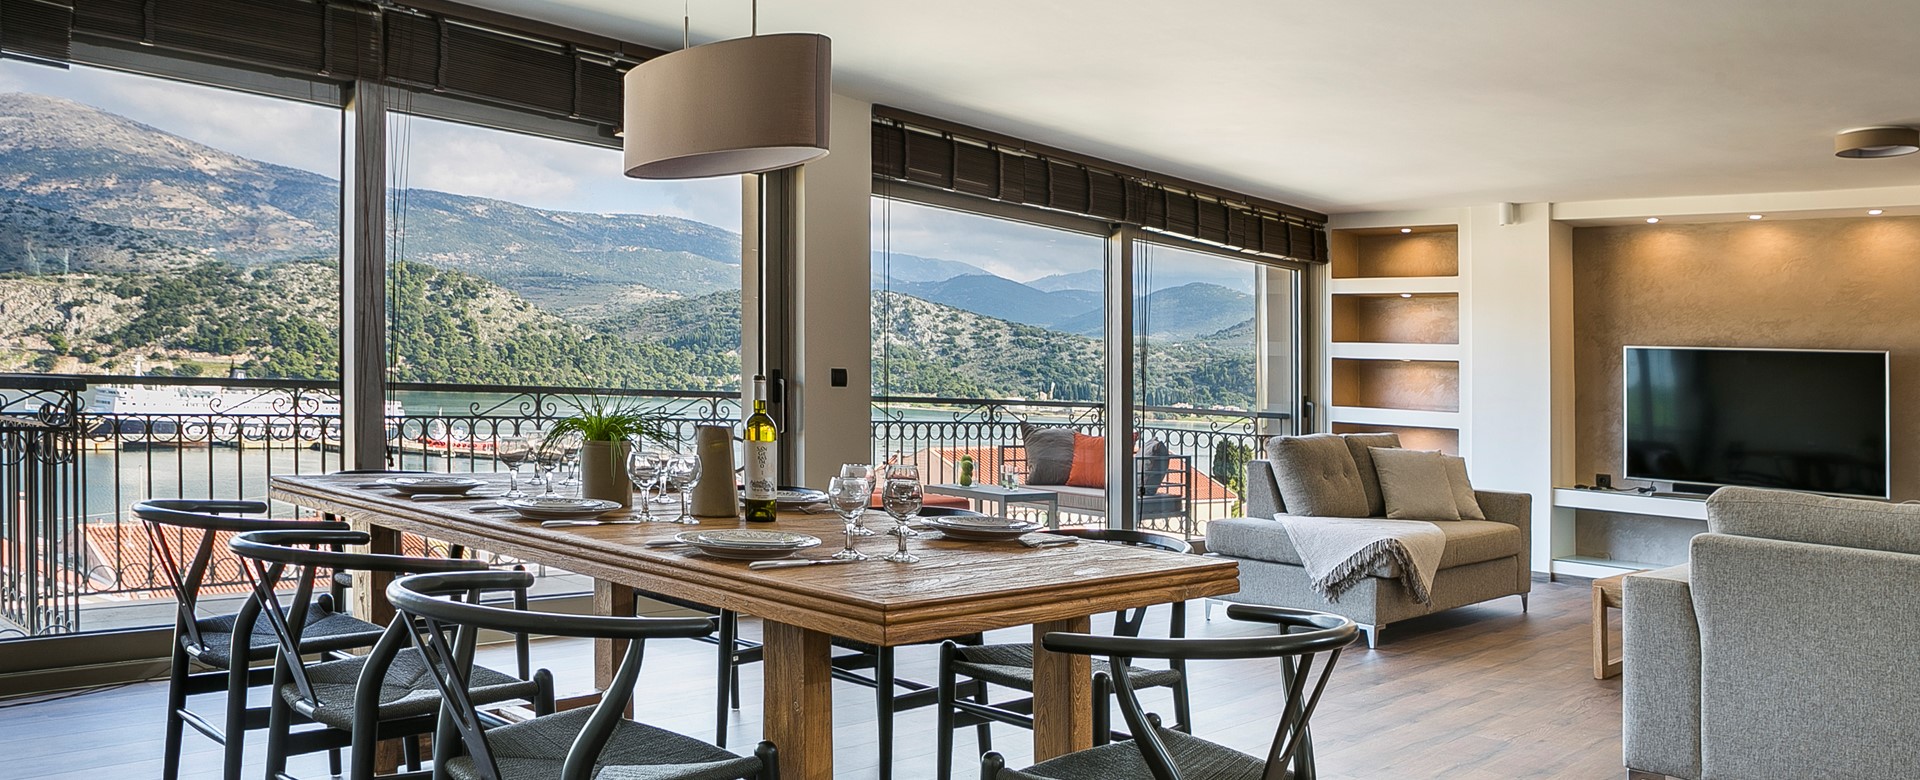 Plenty of room for enjoying dinner and drinks around the table inside Marina Penthouse Apartment, Argostoli, Kefalonia, Greek Islands